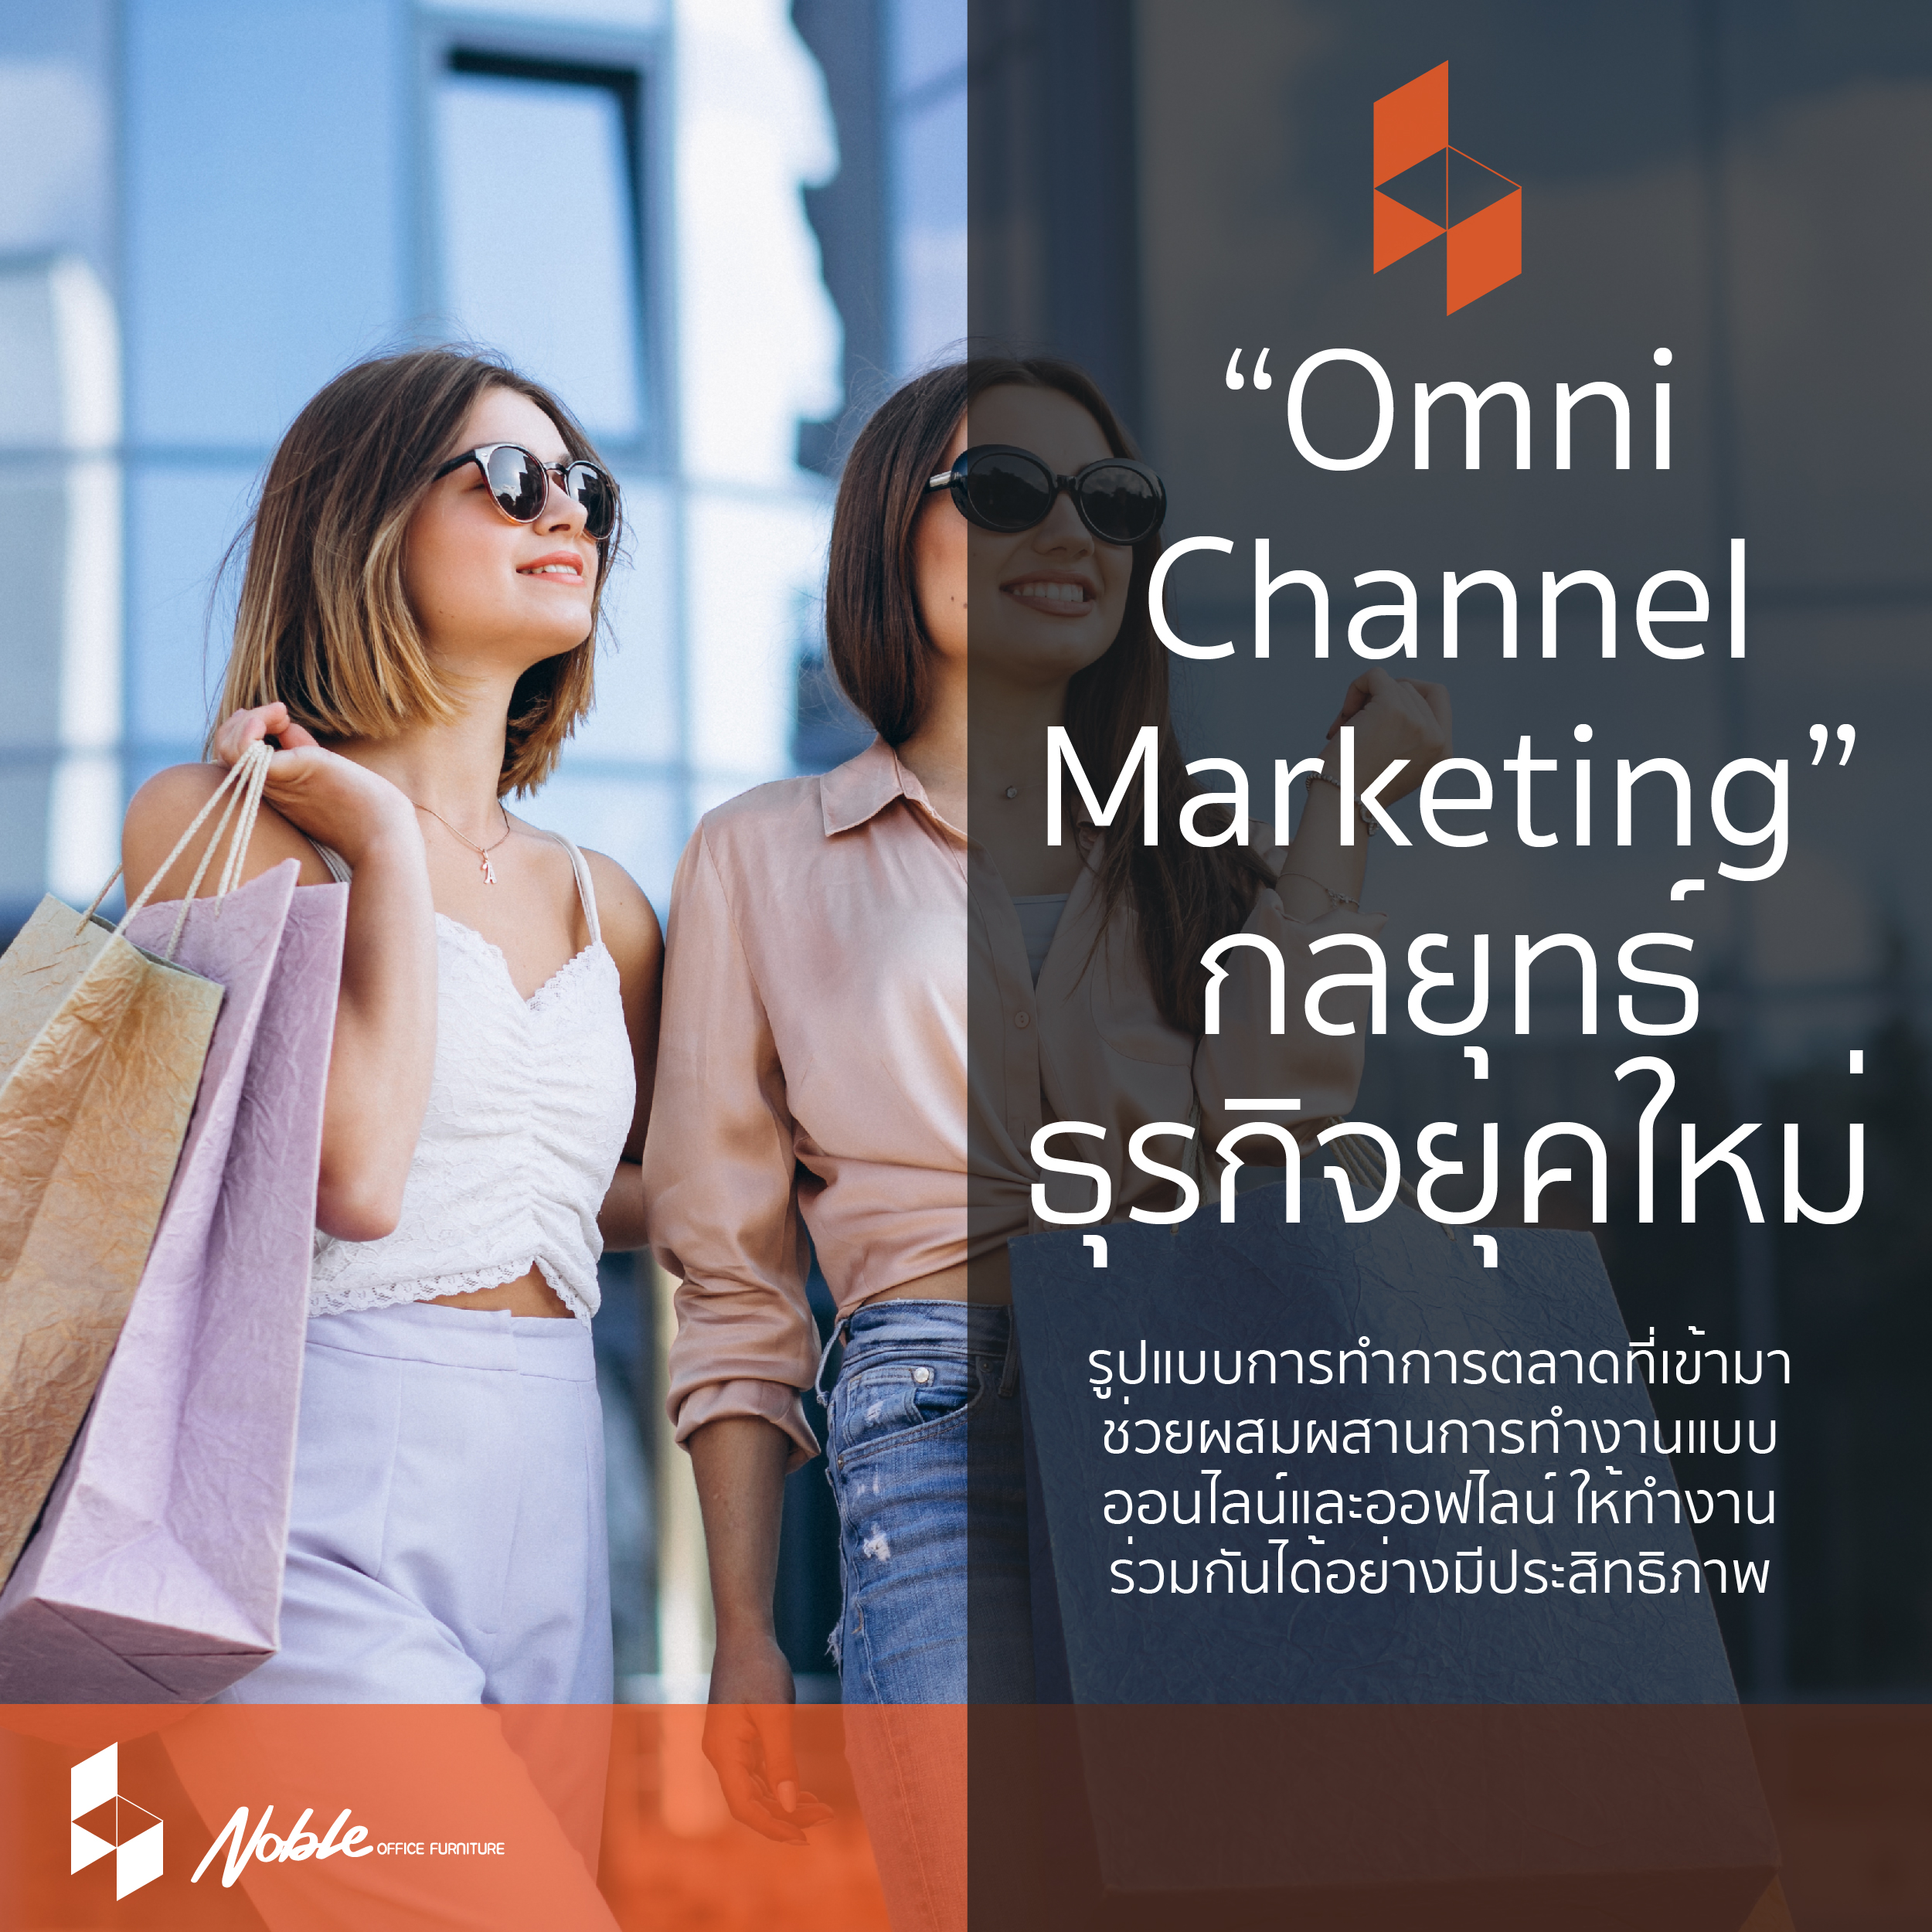 Omni Channel Marketing การตลาดลูกผสมออนไลน์และออฟไลน์ 